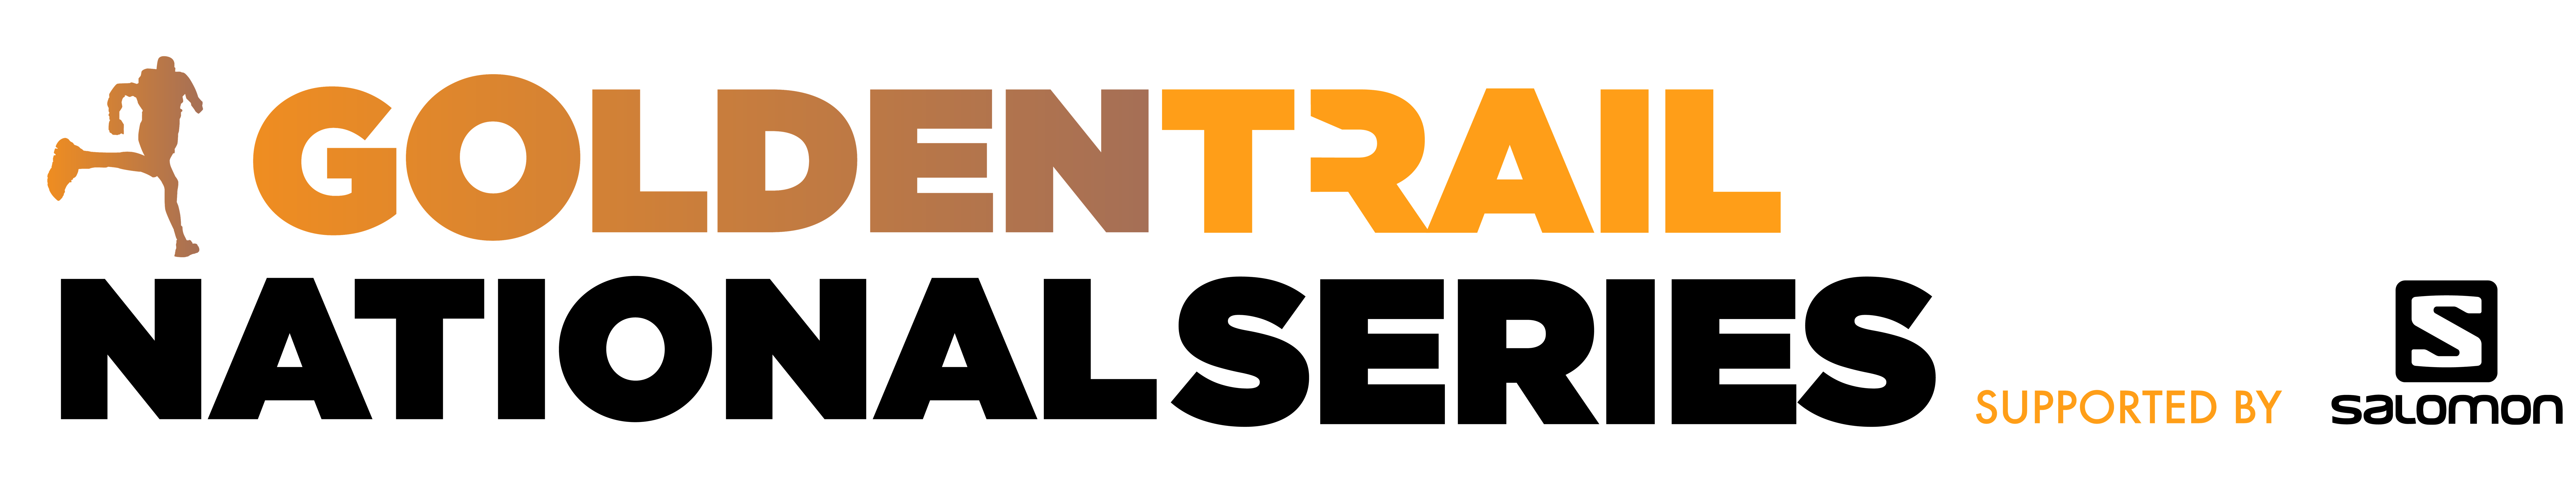 Golden Trail National Series logo